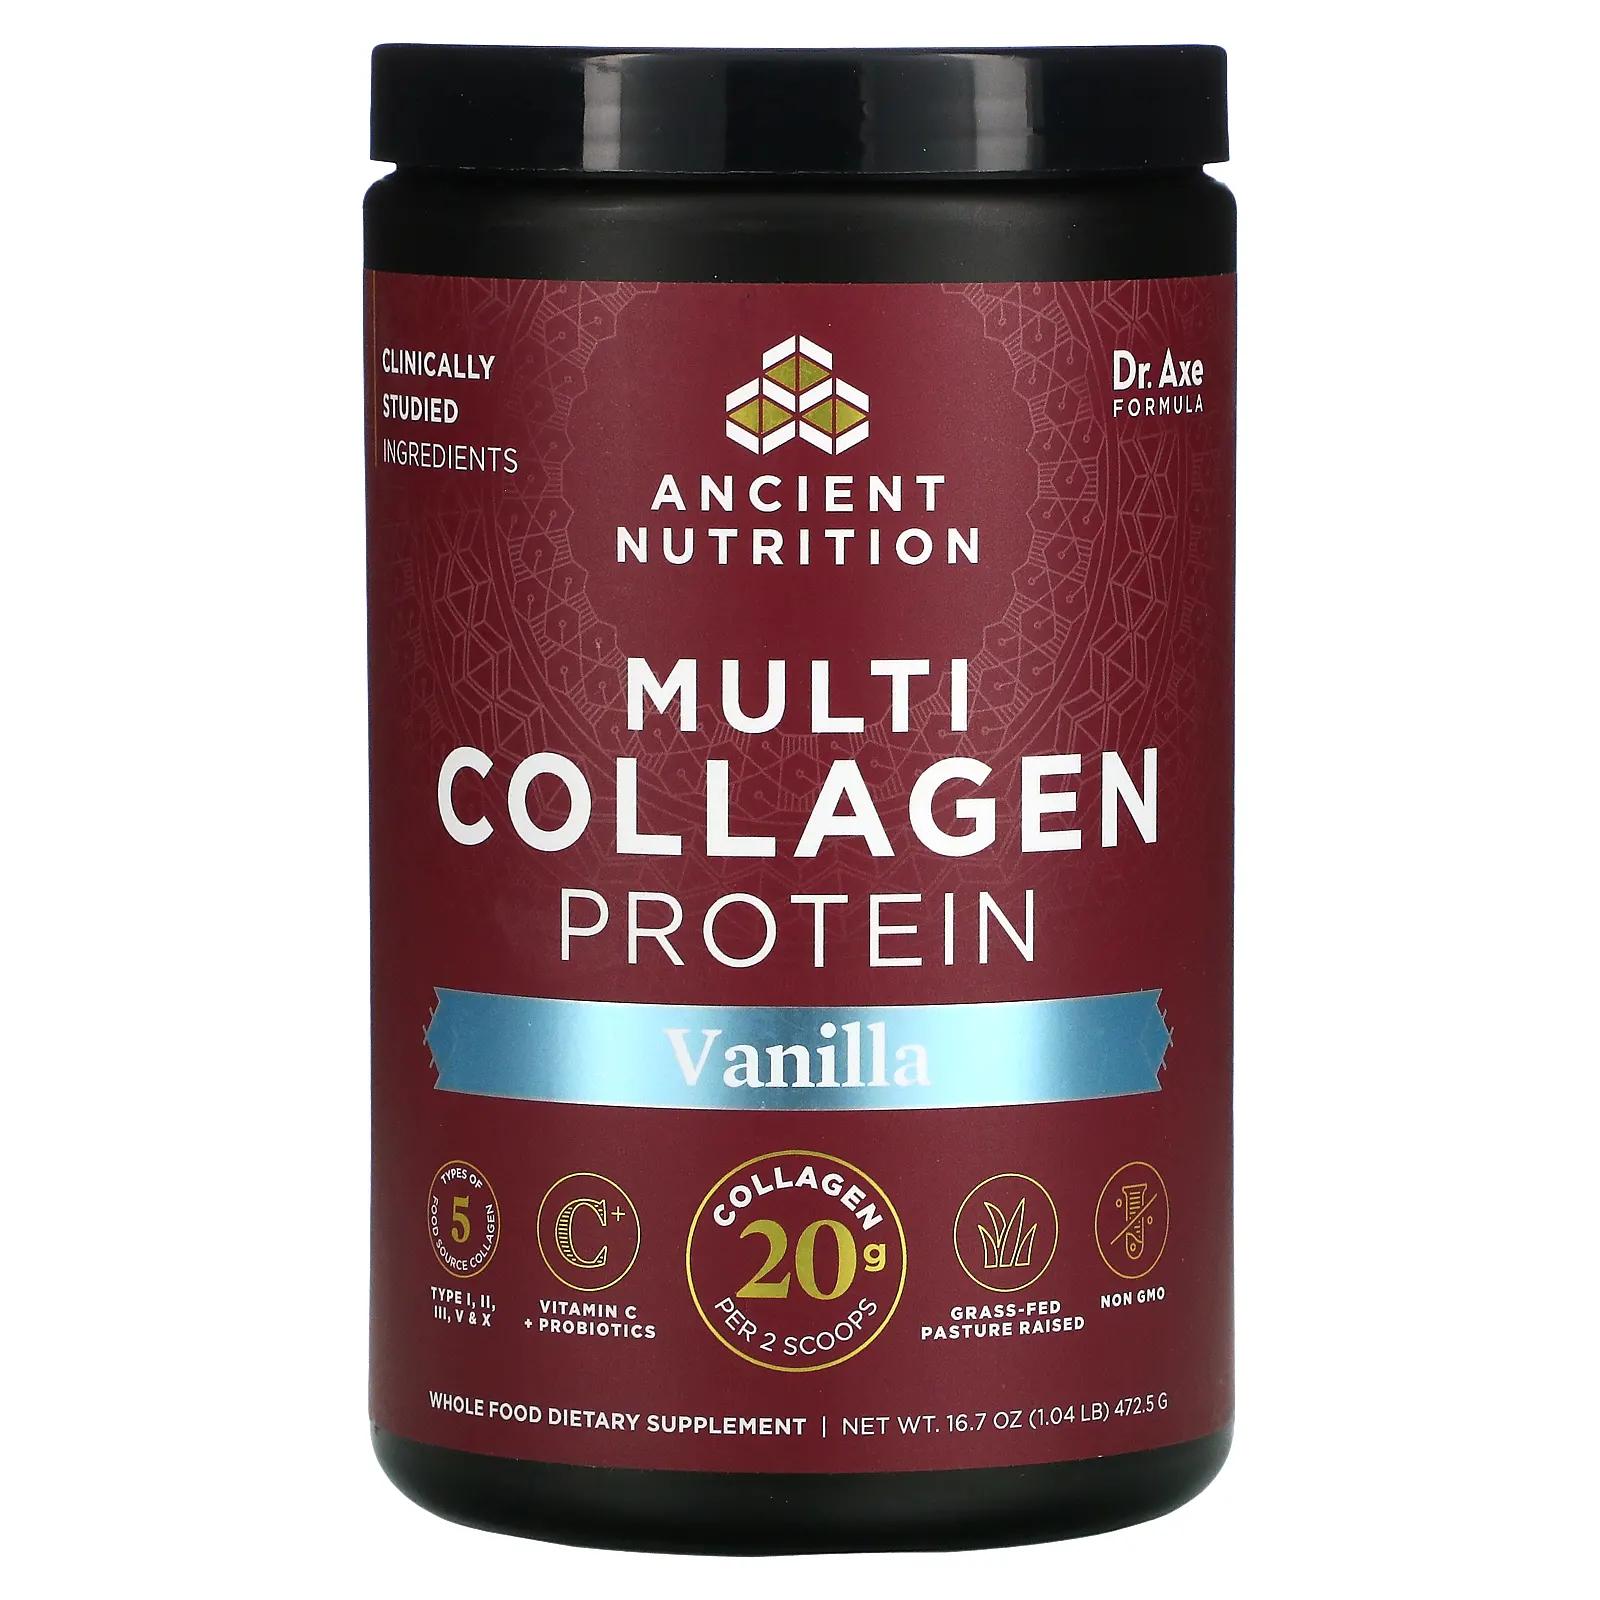 Dr. Axe / Ancient Nutrition Multi Collagen Protein Vanilla 16.8 oz (475 g) dr axe ancient nutrition multi collagen protein клубничный лимонад 10 1 унции 285 6 г